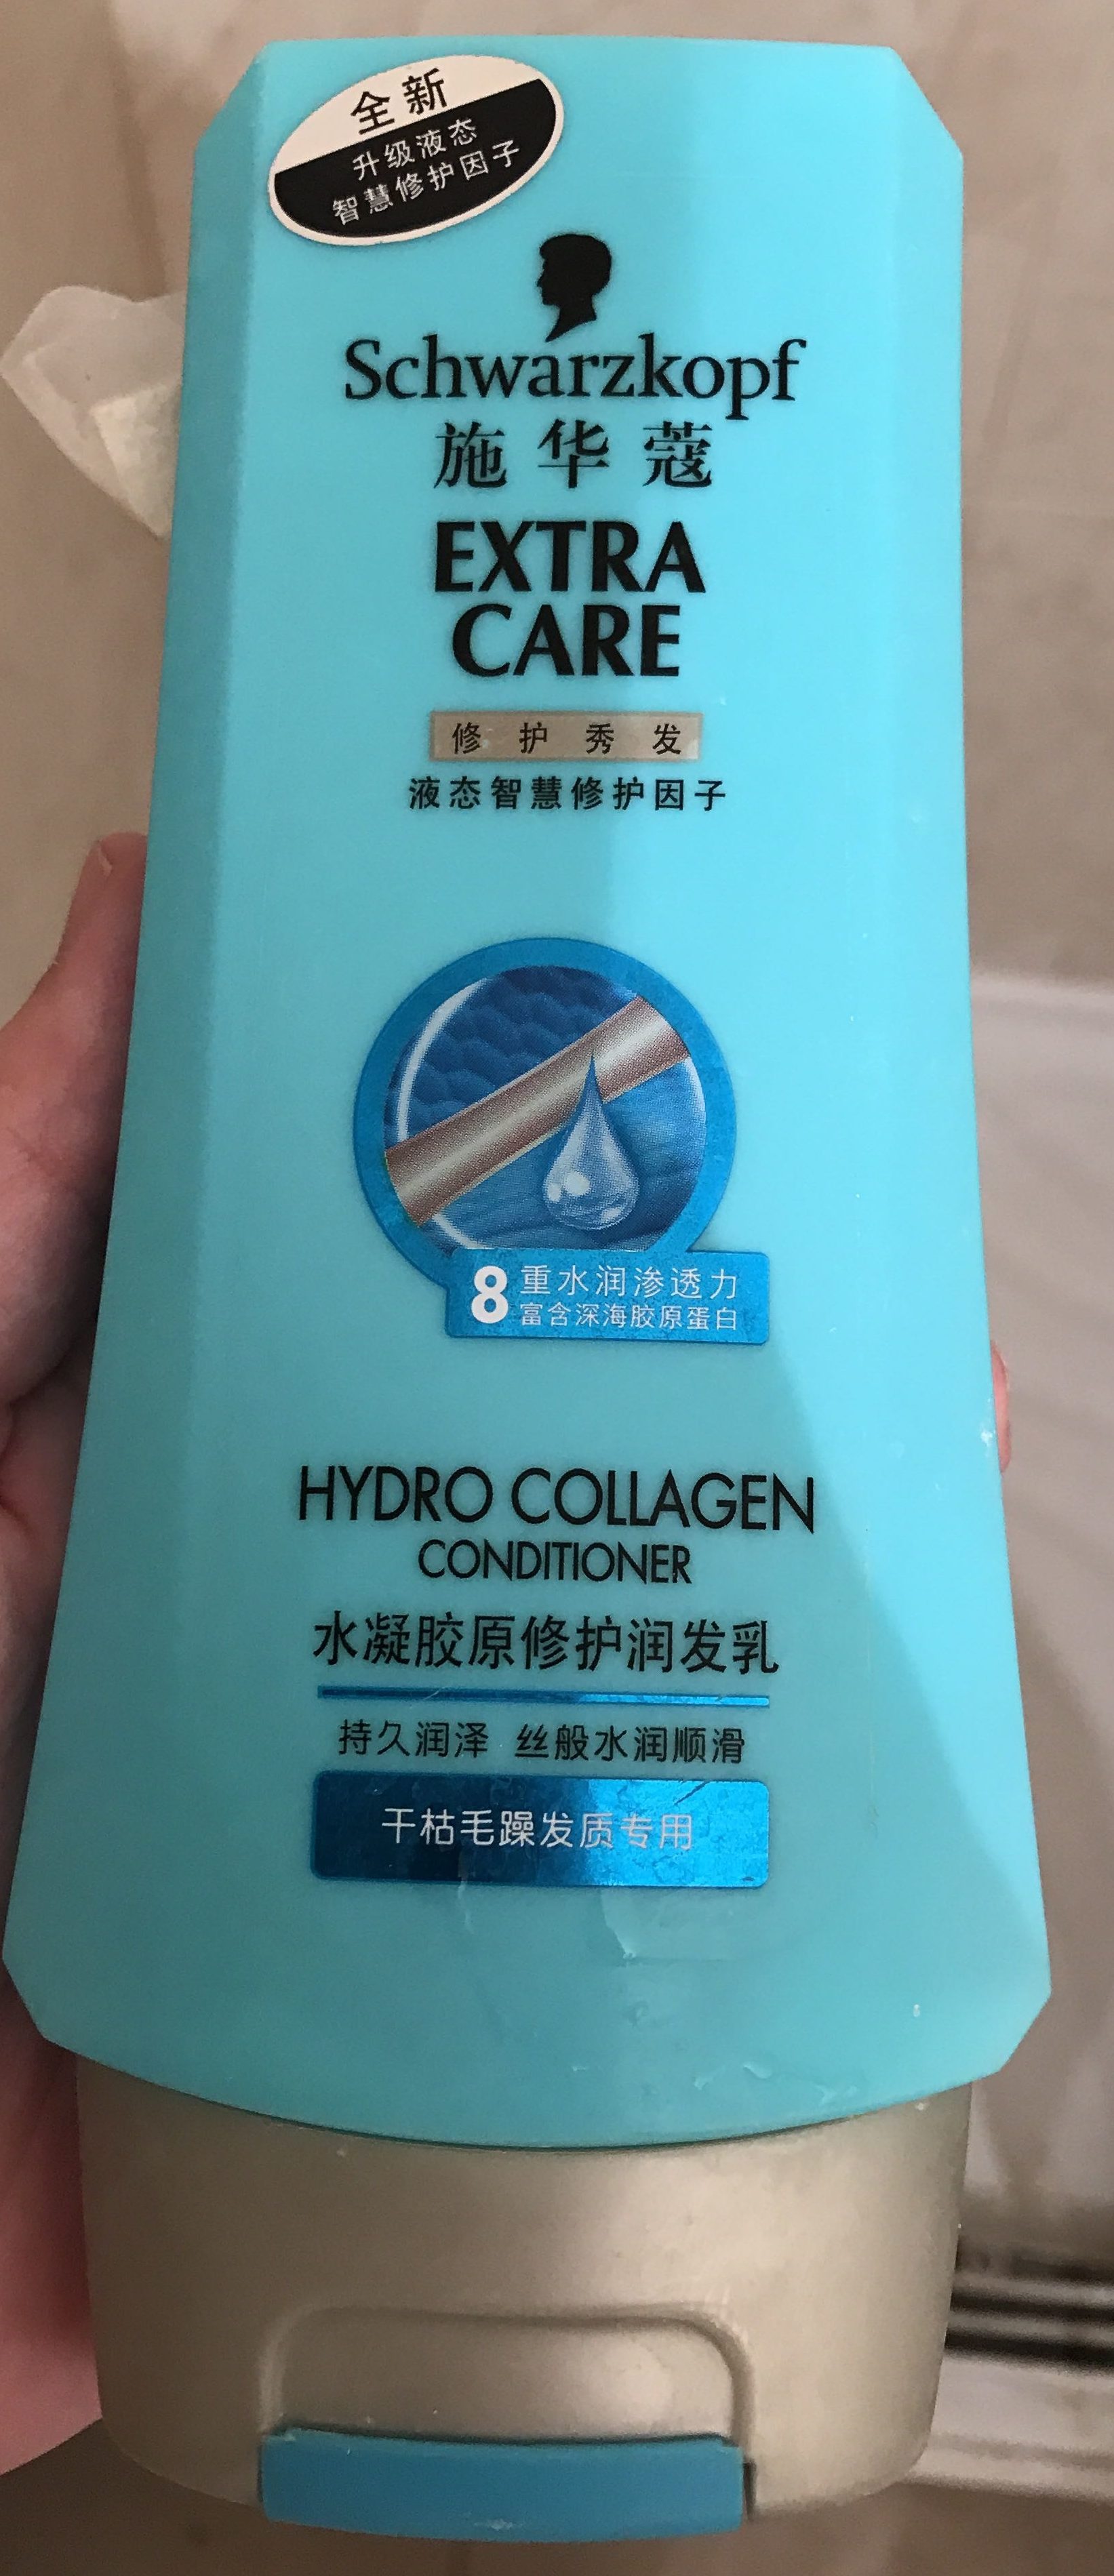 Extra Care 修护润发 Hydro Collagen Conditioner - Продукт - zh